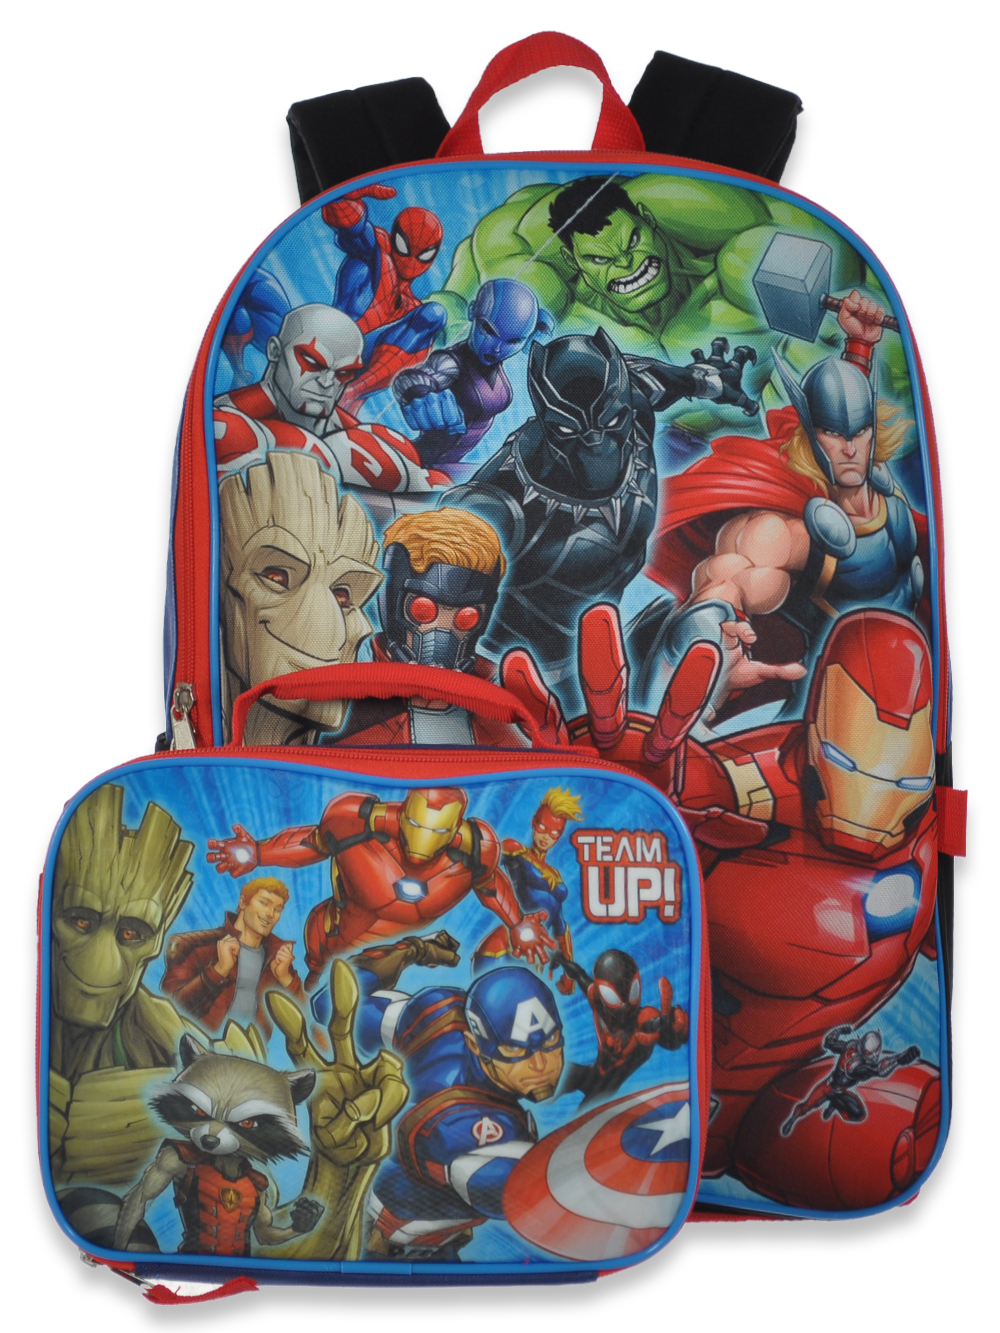 Marvel Backpack 